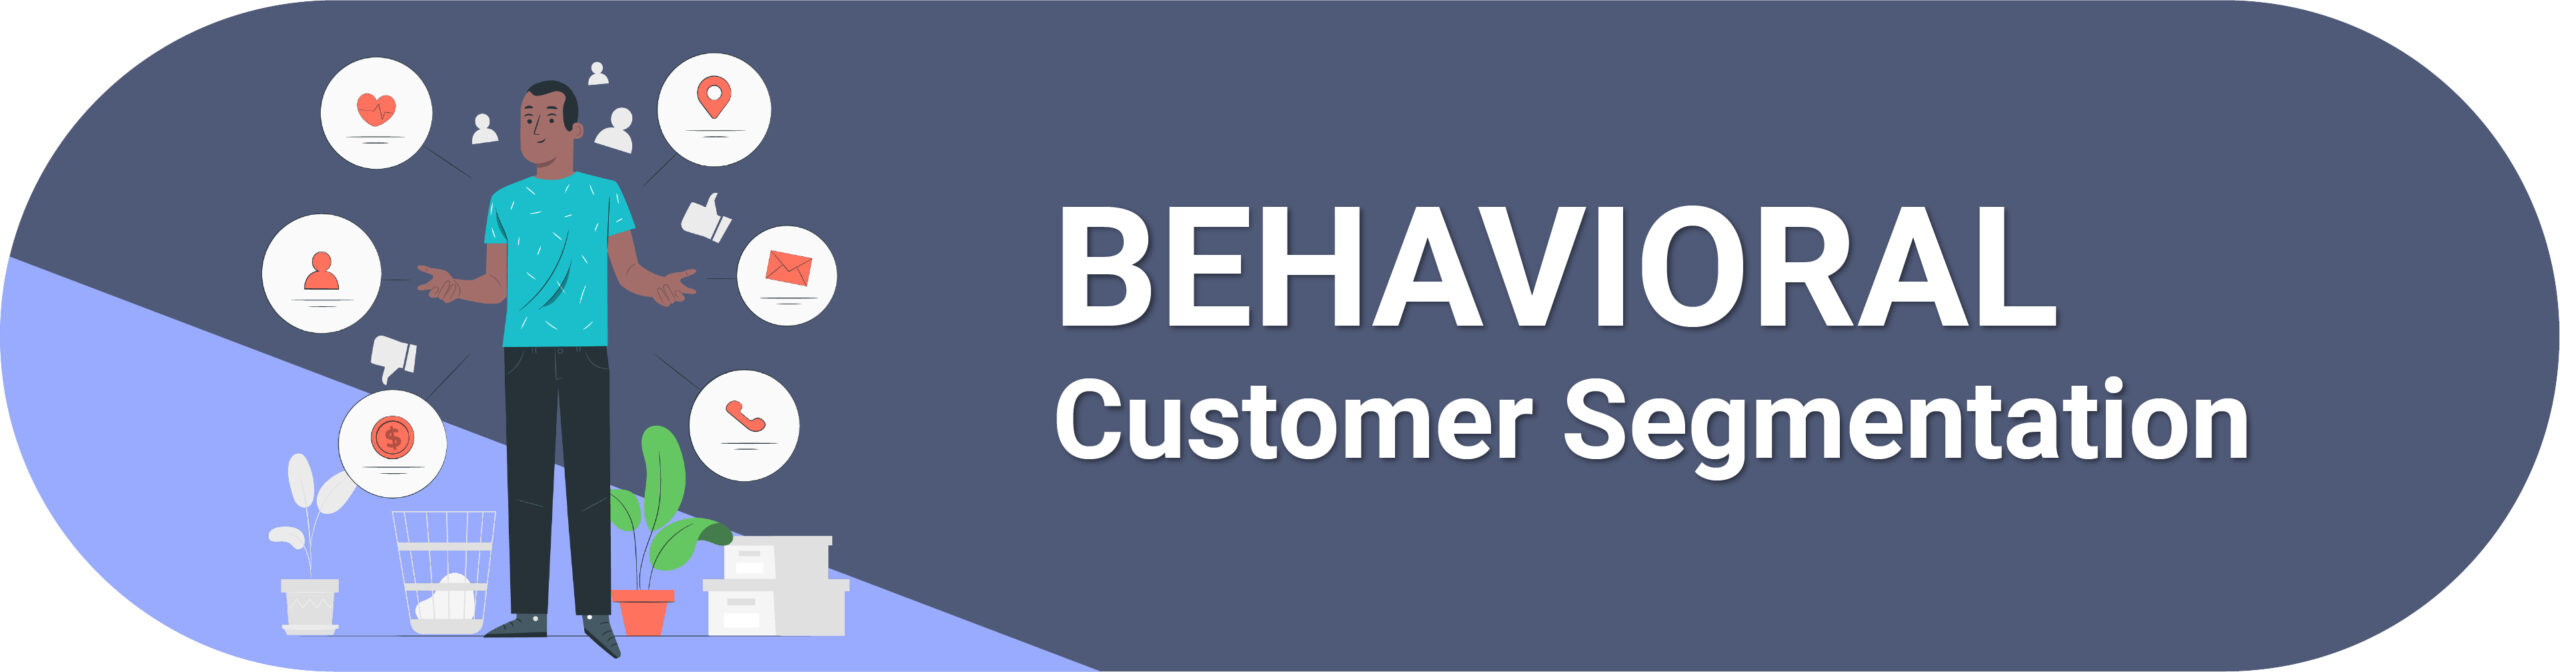 Behavioral customer segmentation